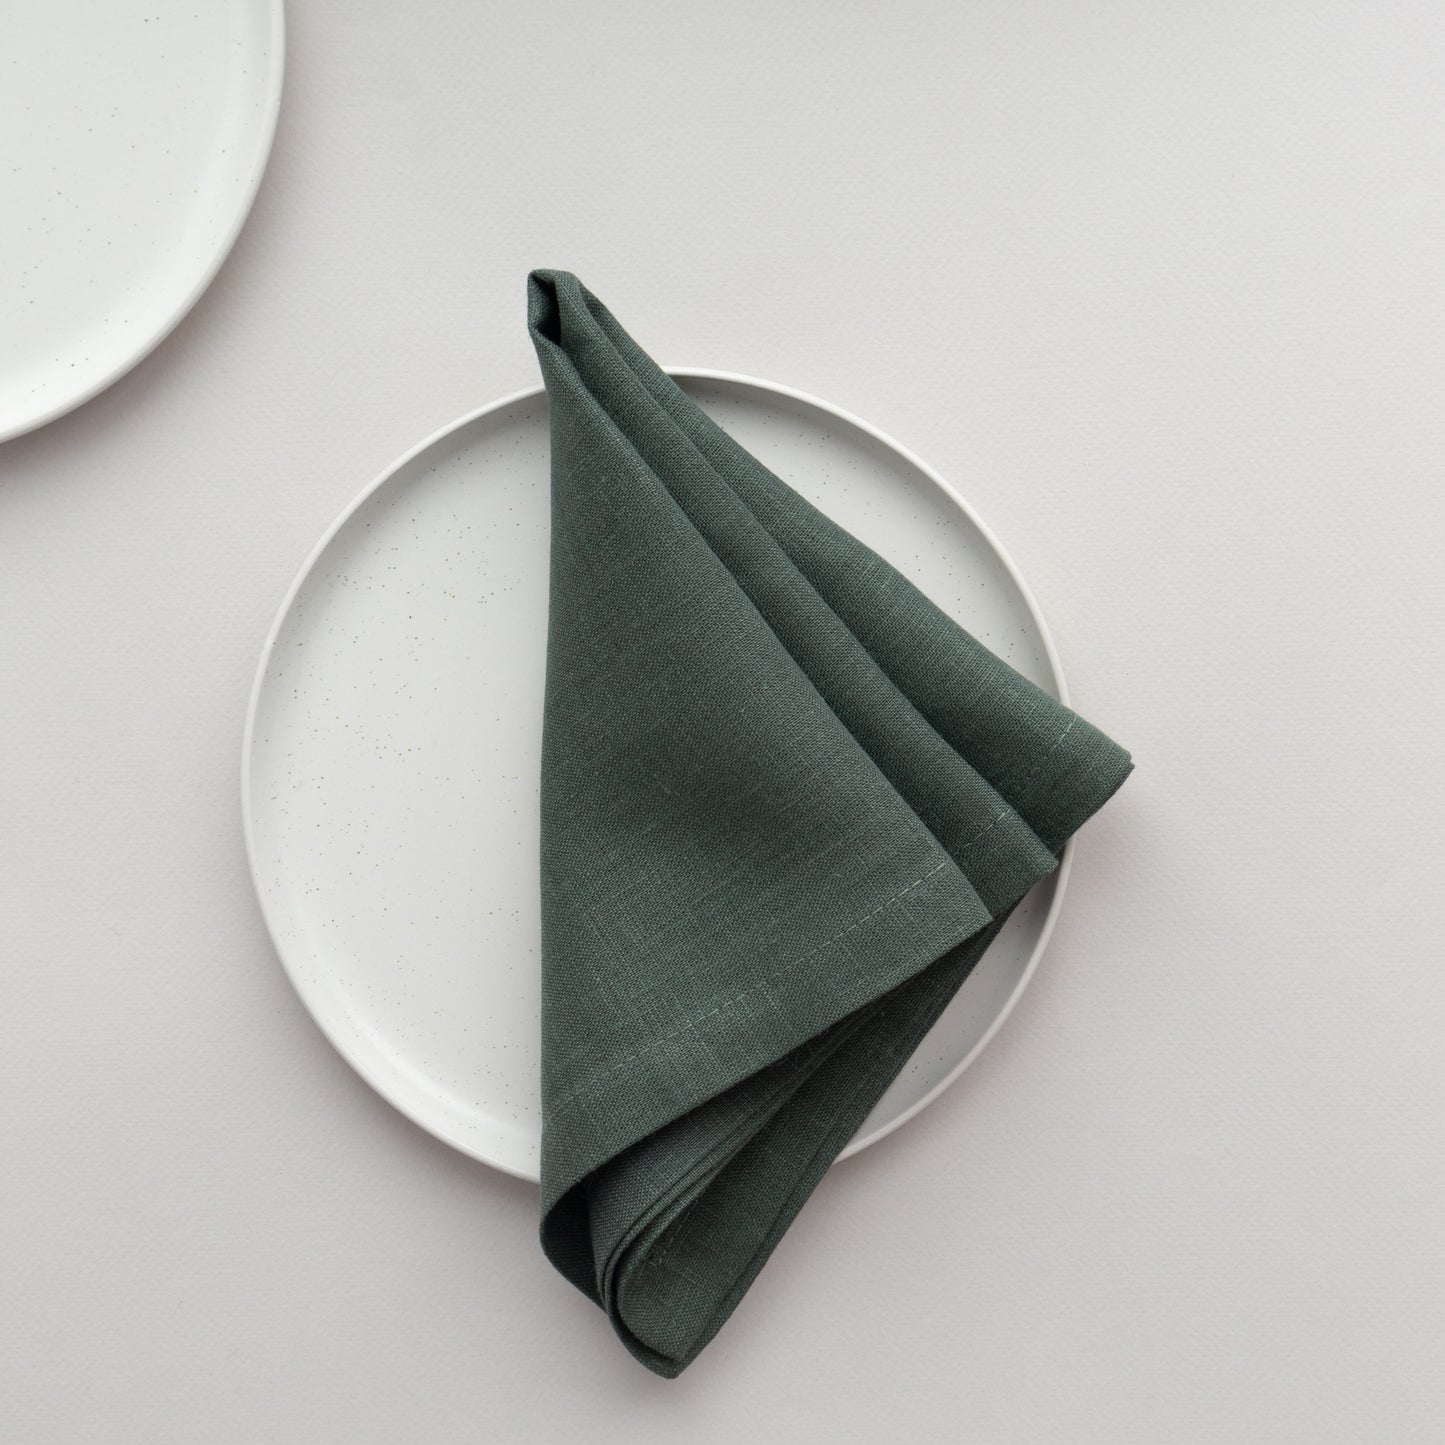 Green linen napkins - Beanchy